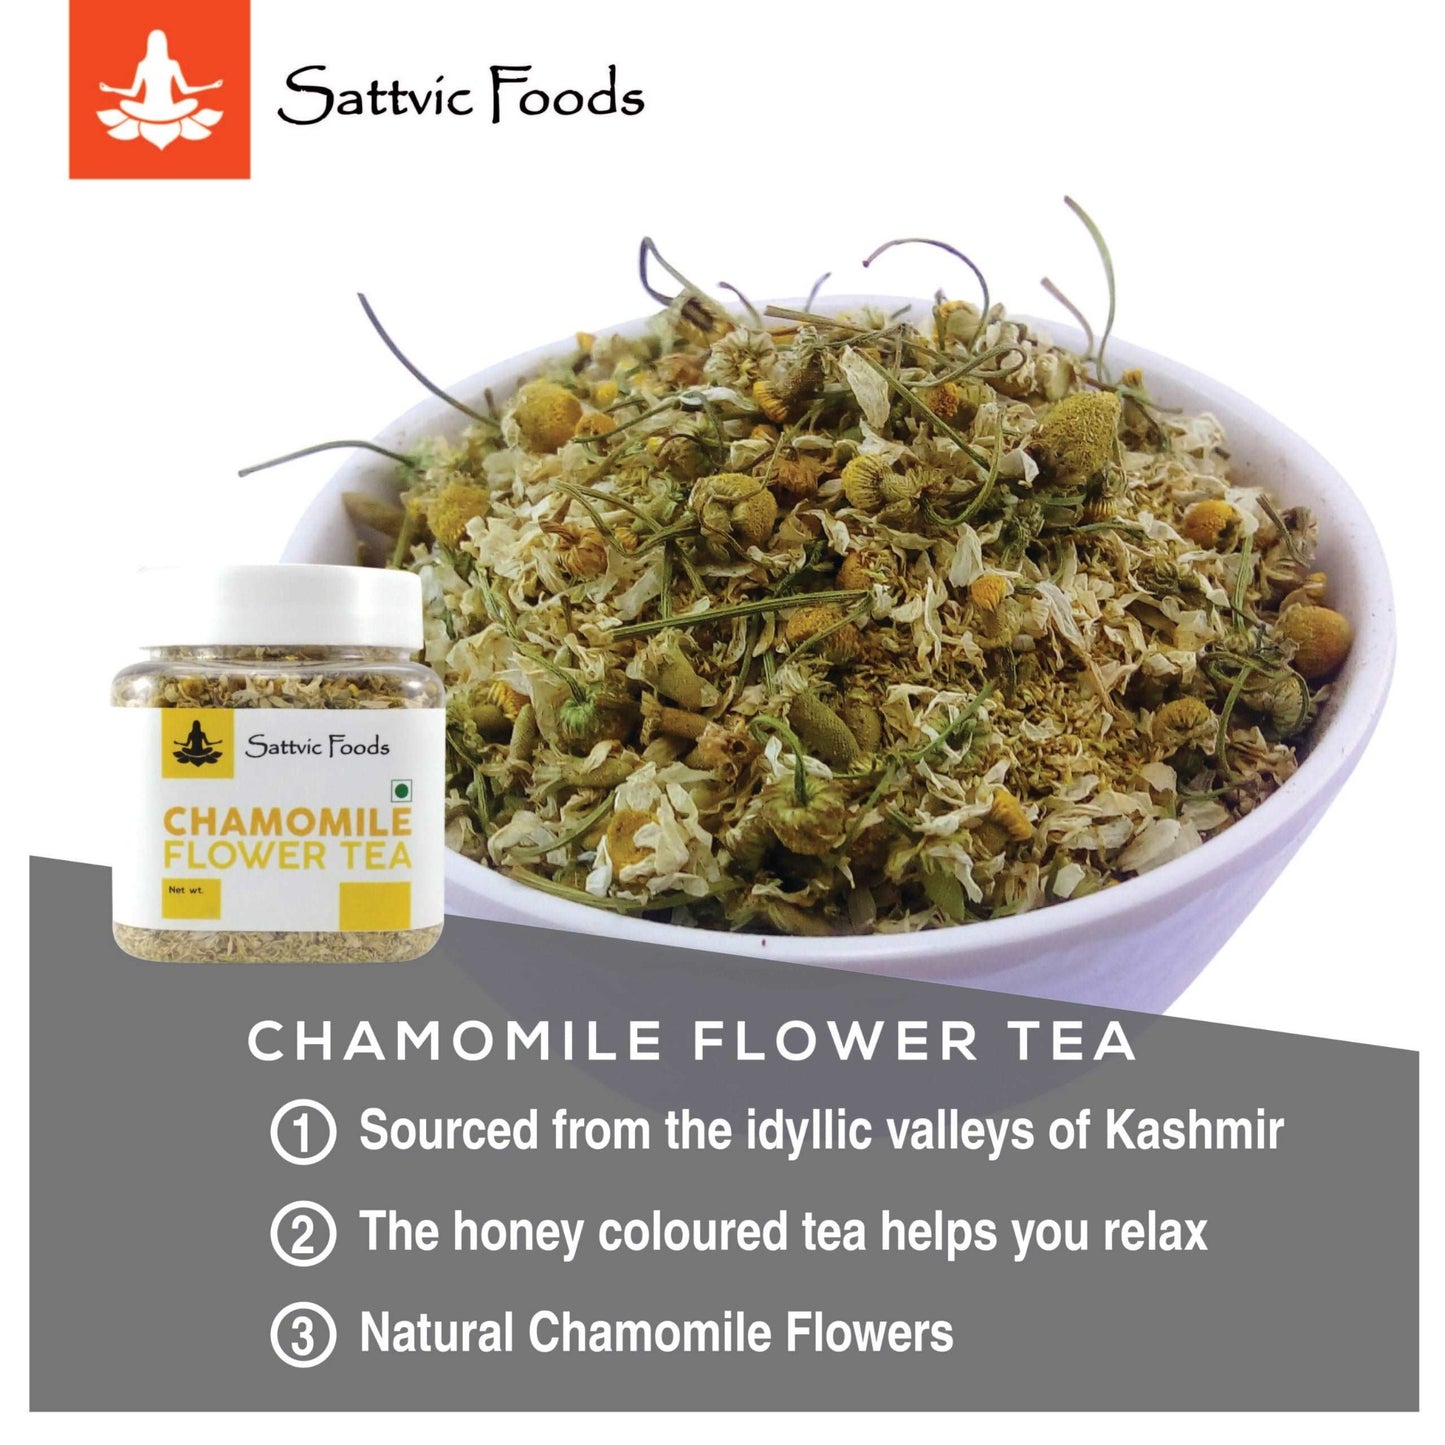 Chamomile Flower Tea - Features